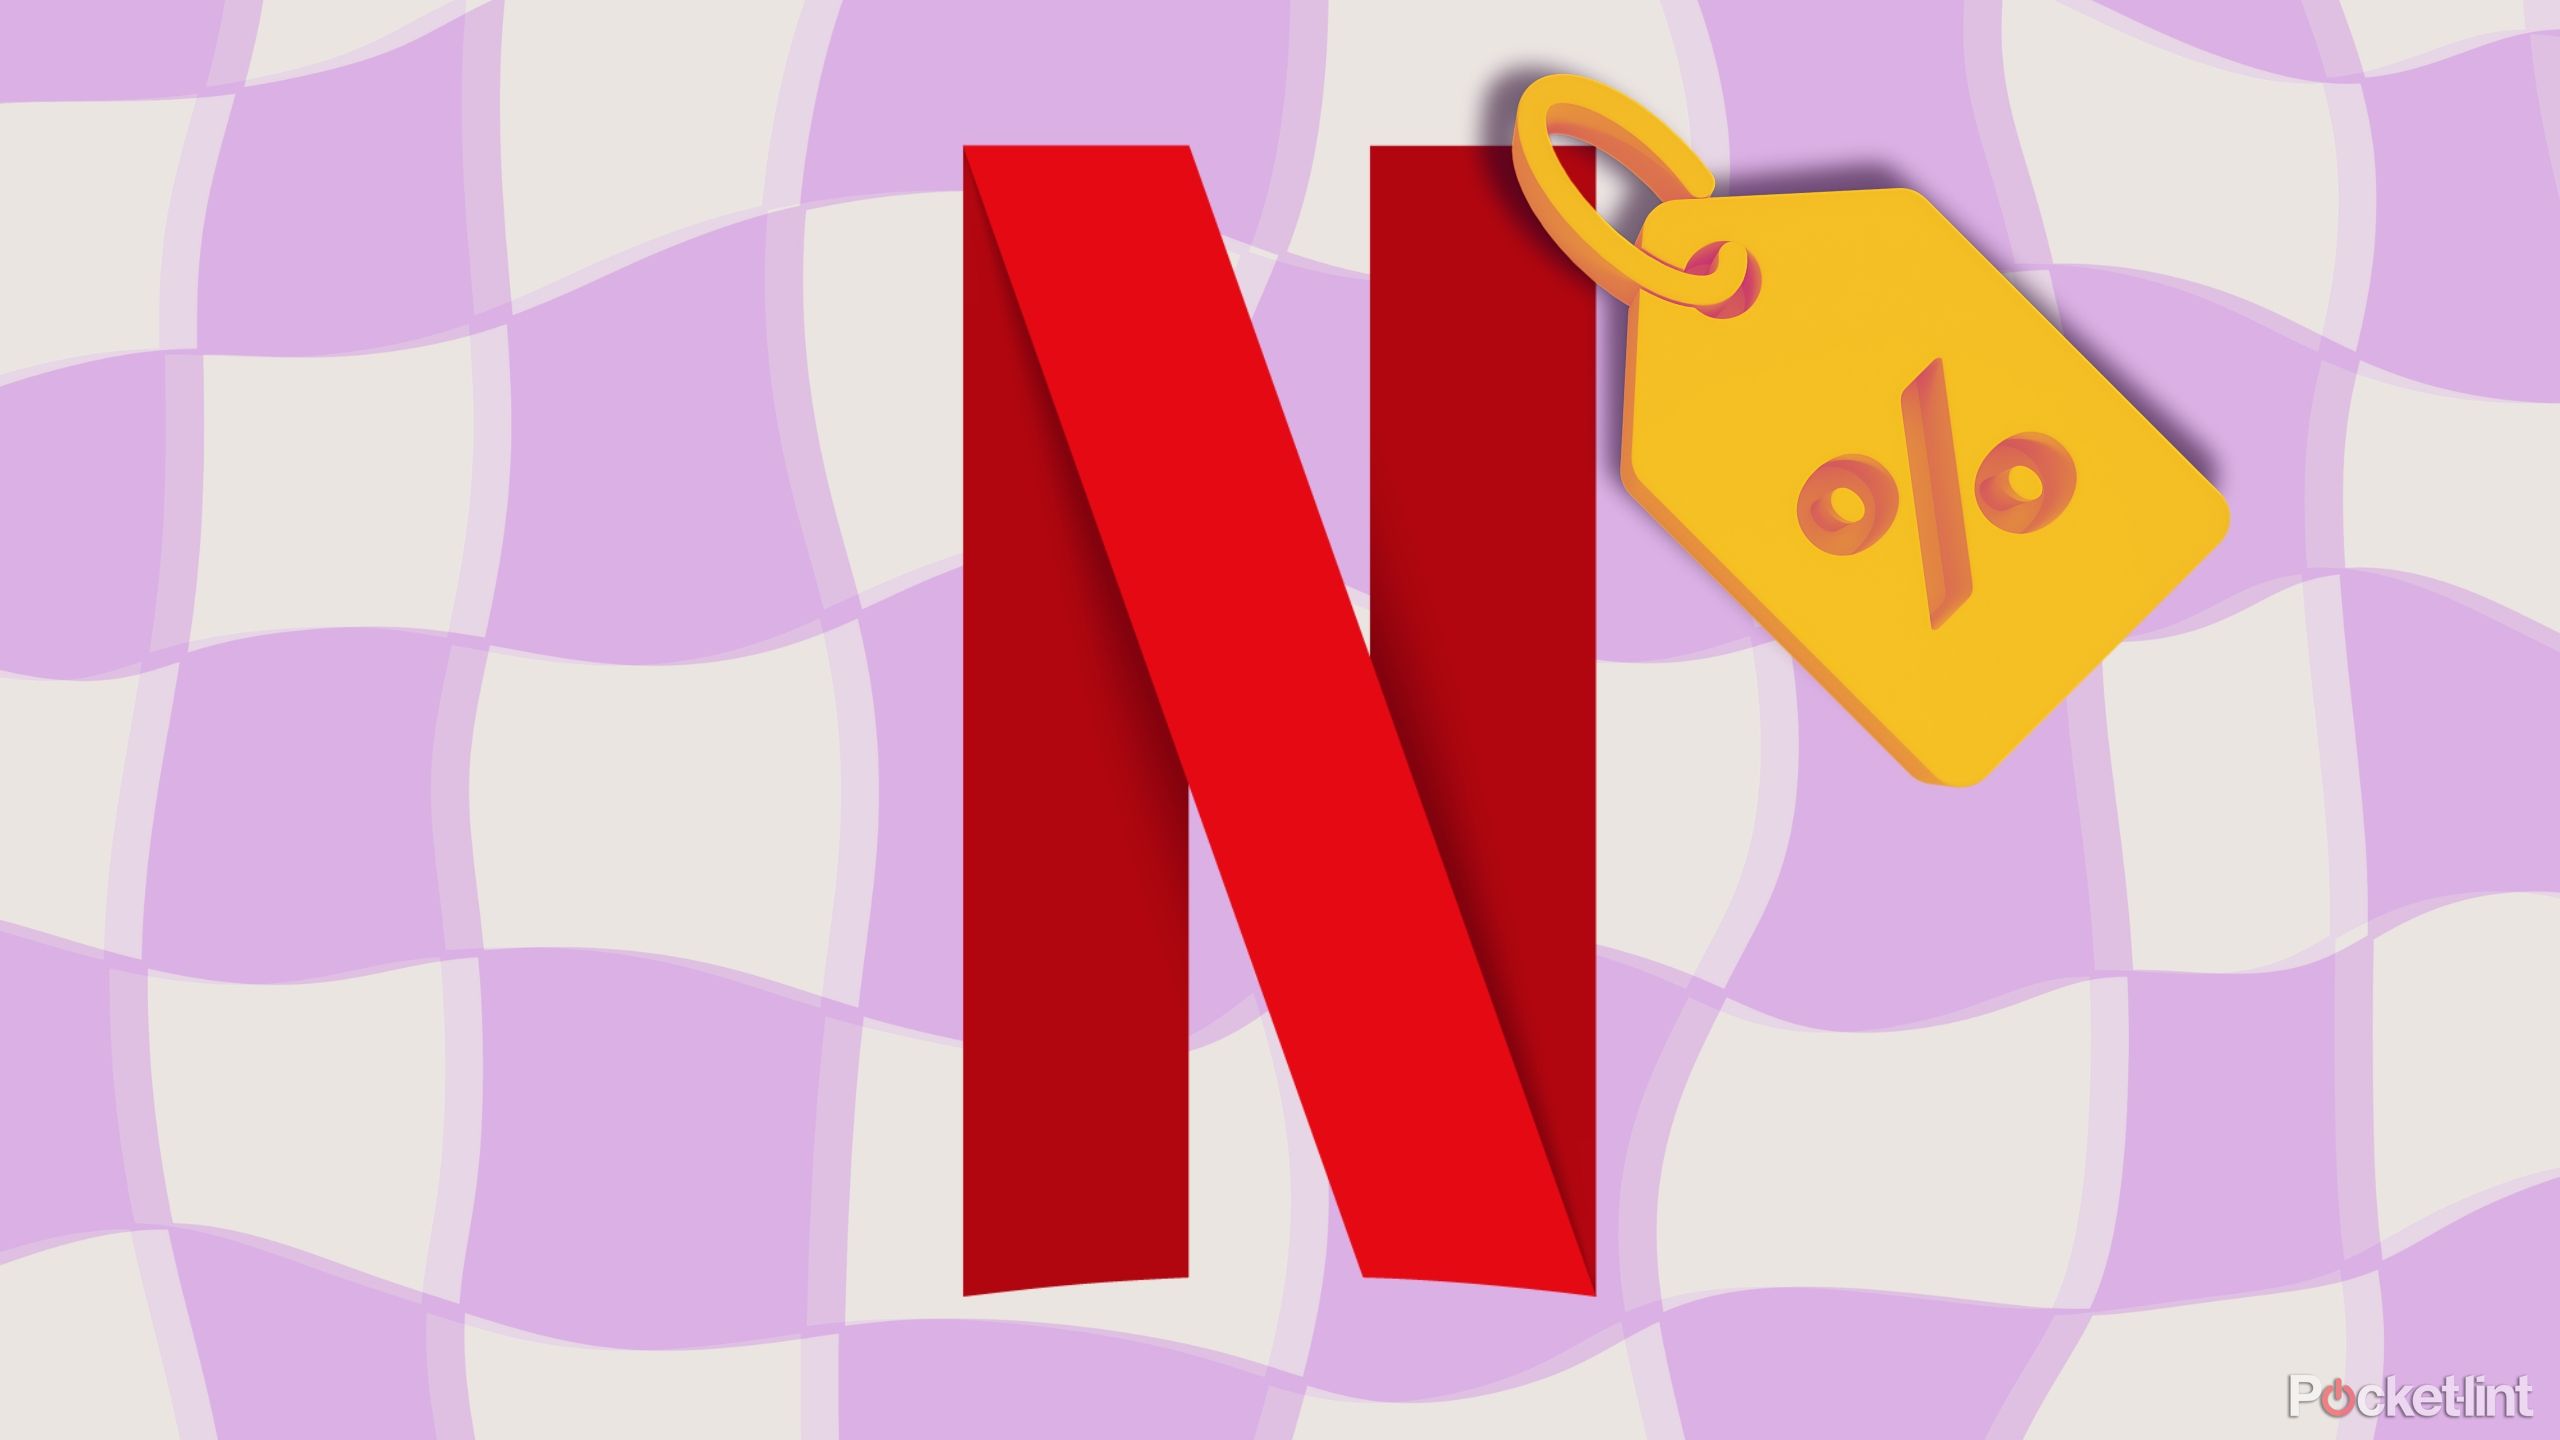 Netflix symbol with percent sale tag off it